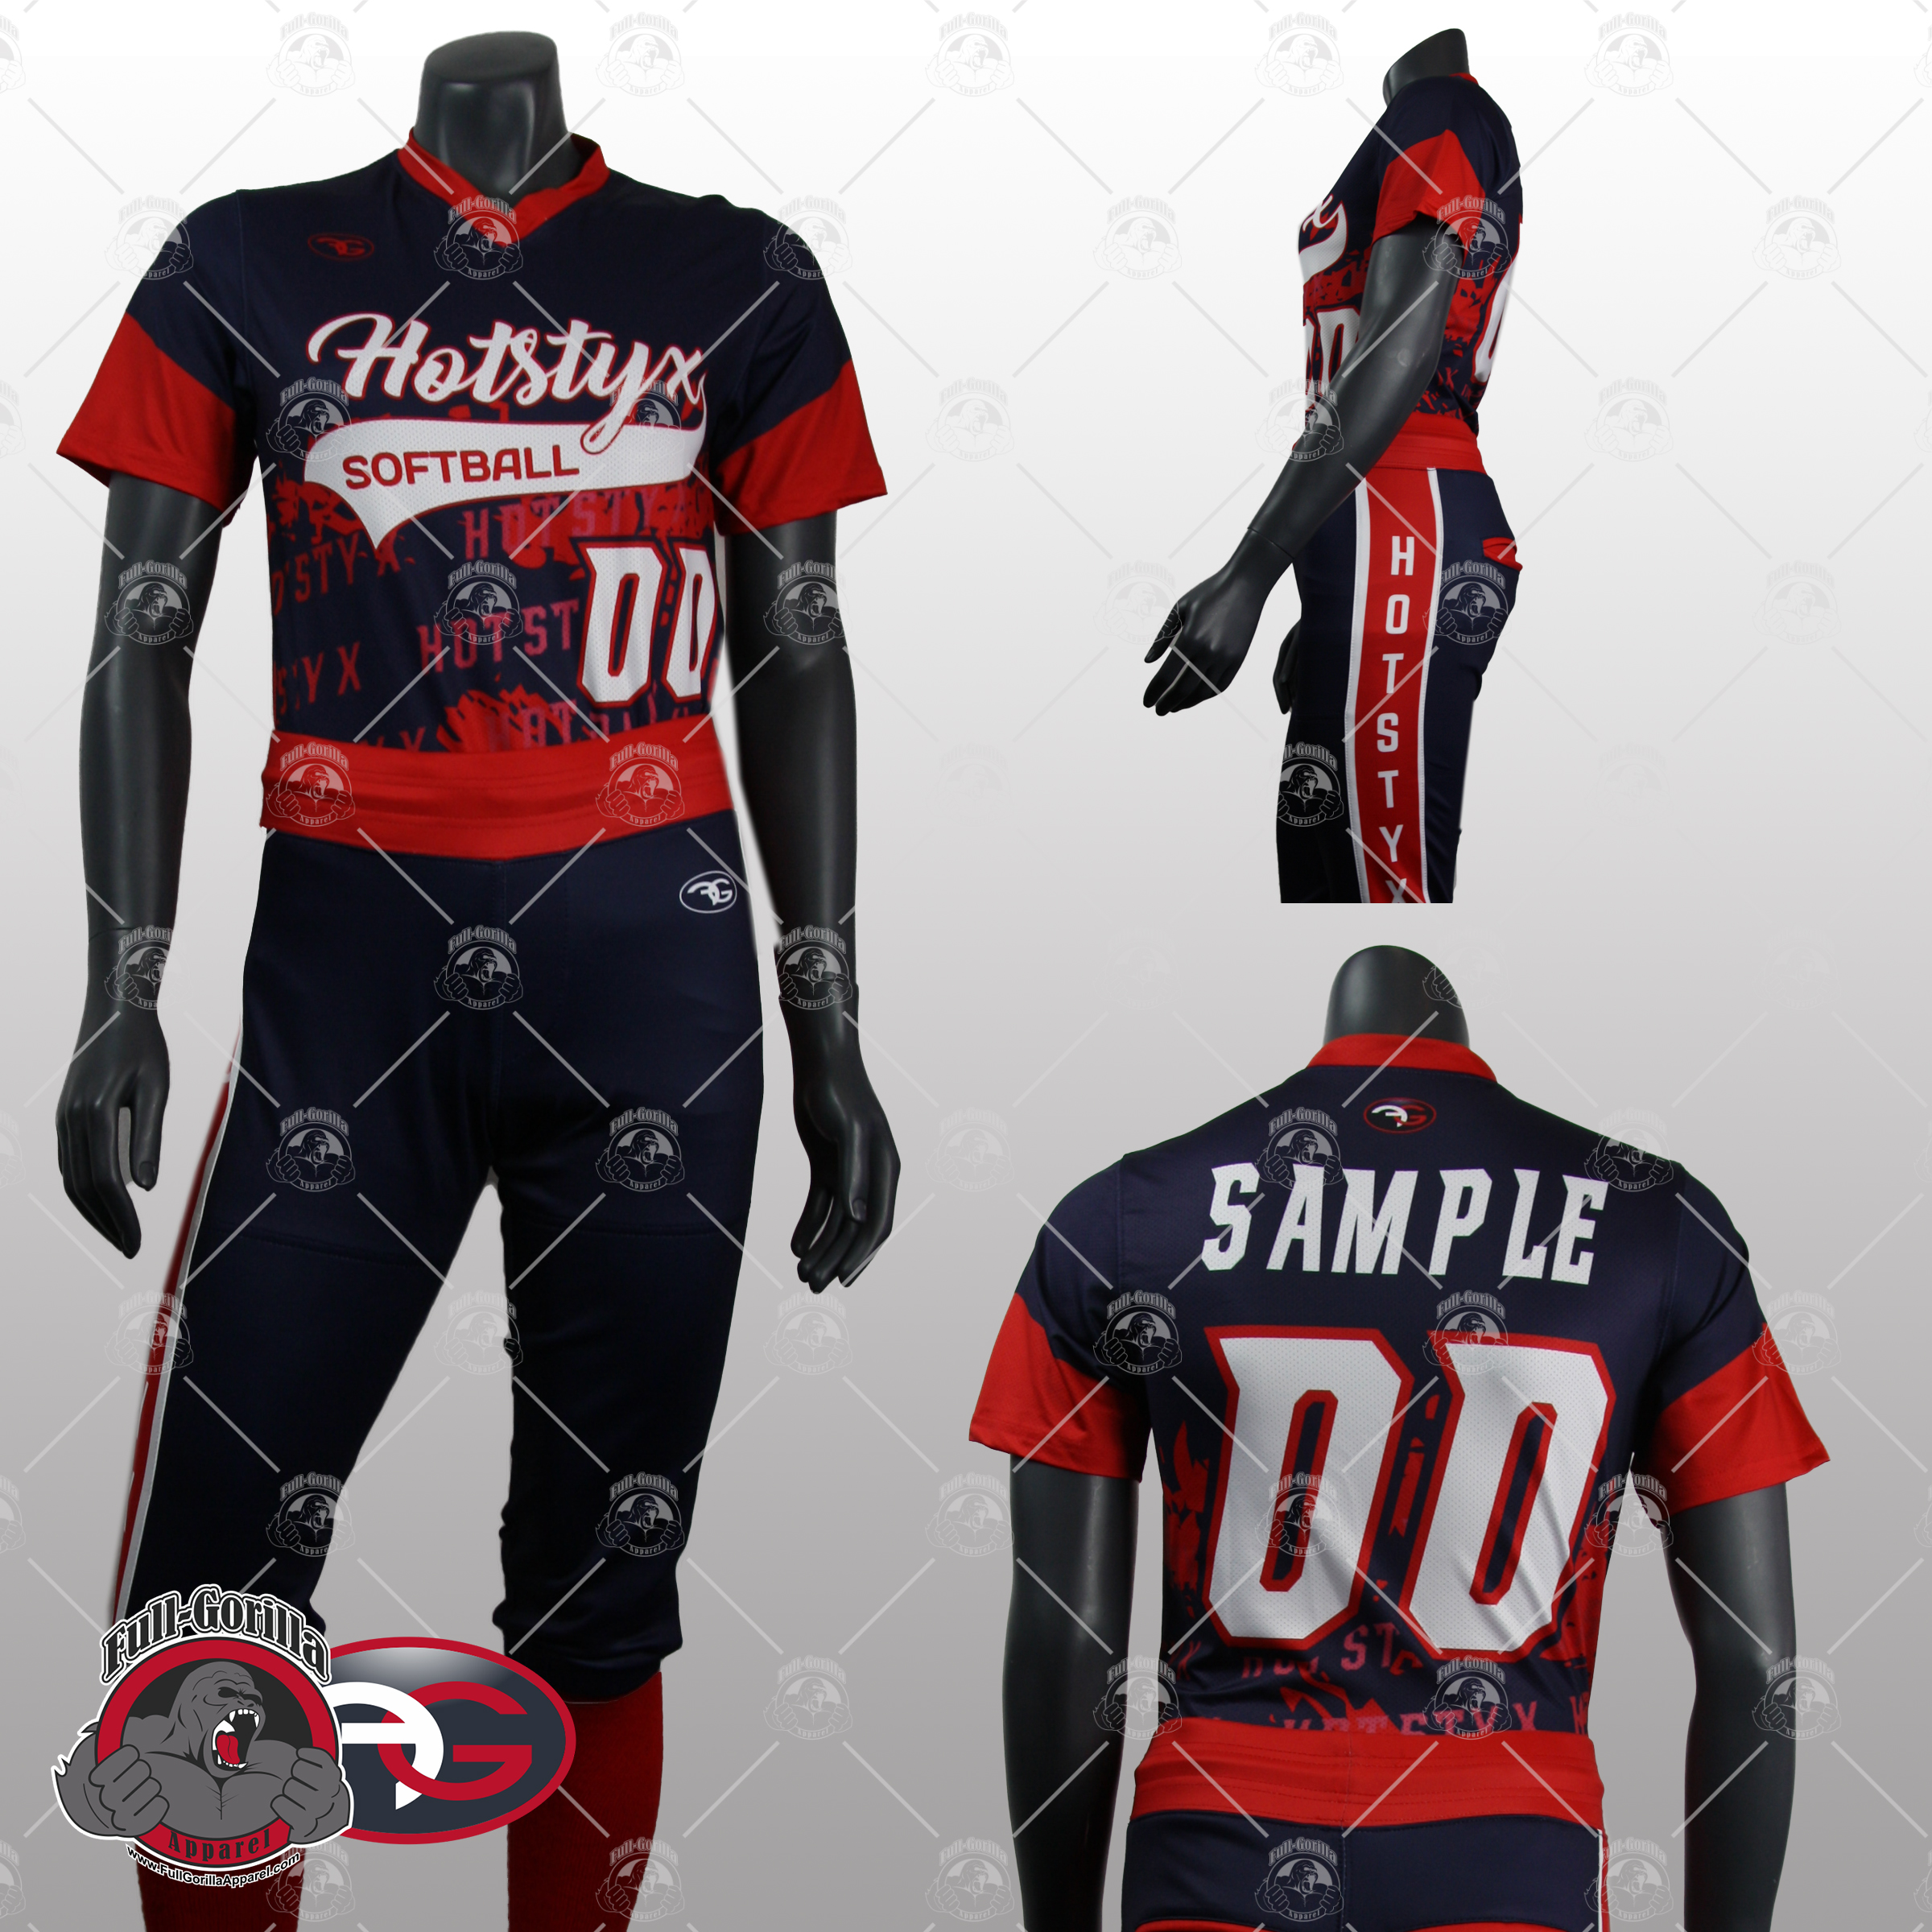 Hotstyx Sleeveless Softball Uniform - Full Gorilla Apparel